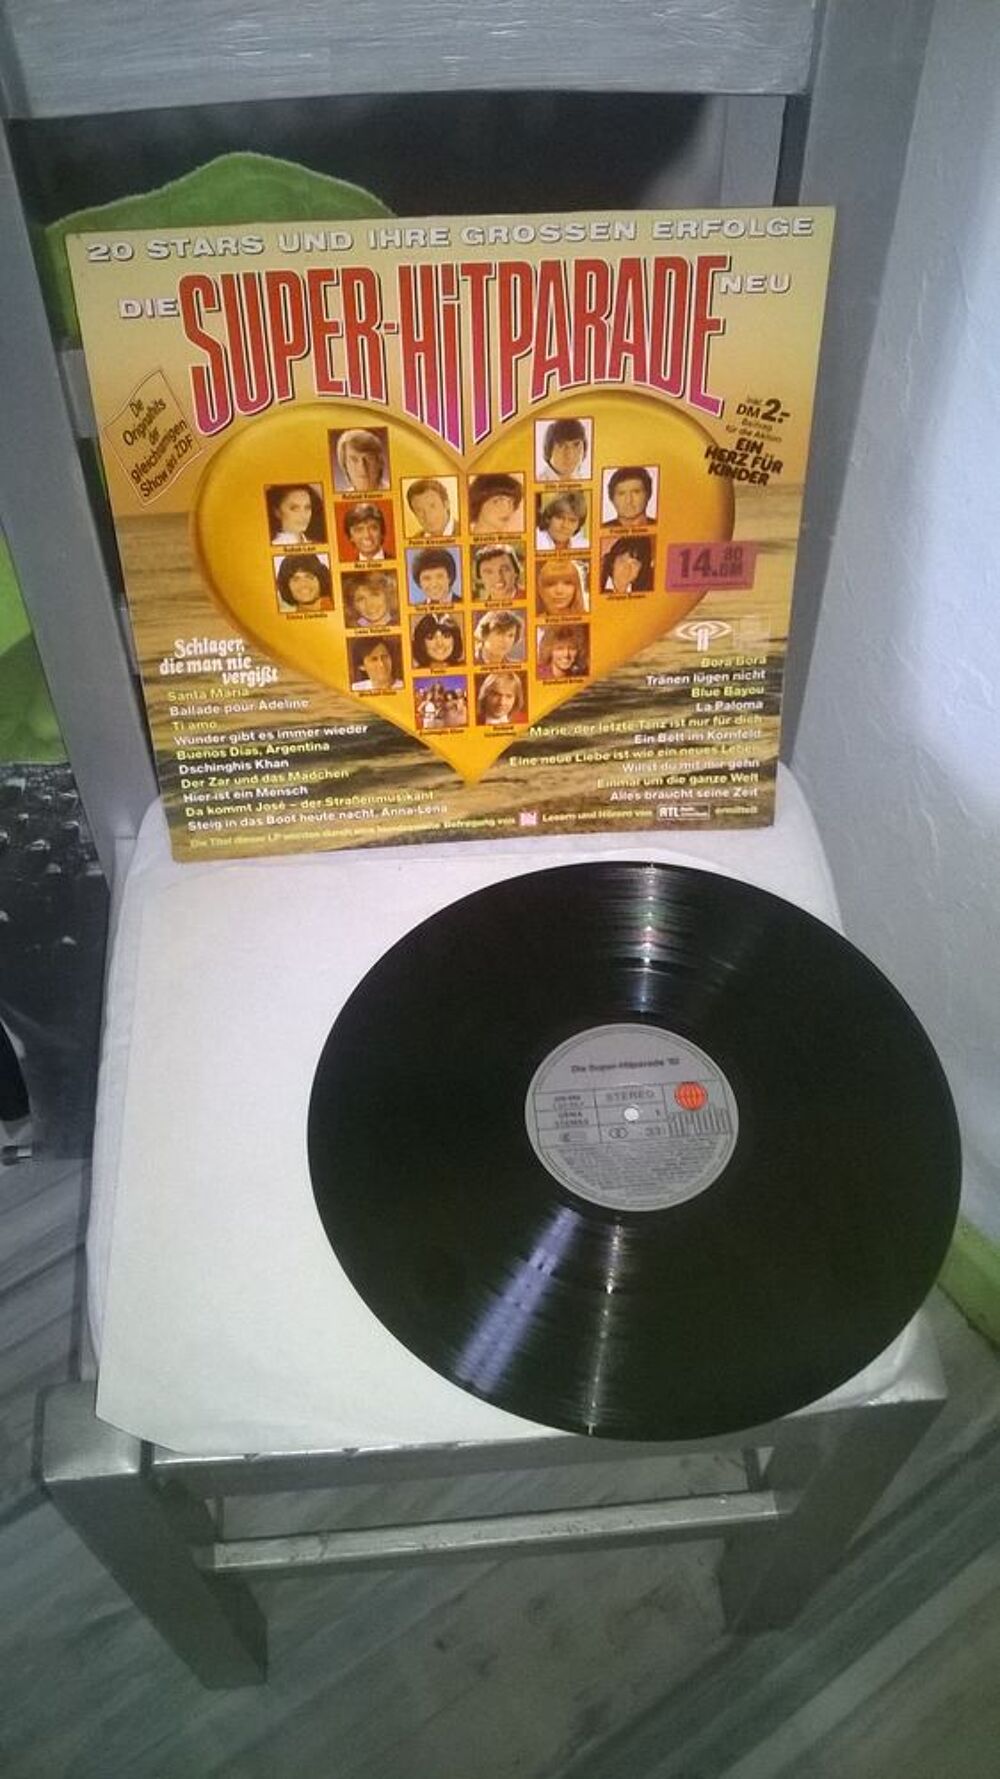 Vinyle Die Super-Hitparade '82
1982
Excellent etat
Peter CD et vinyles